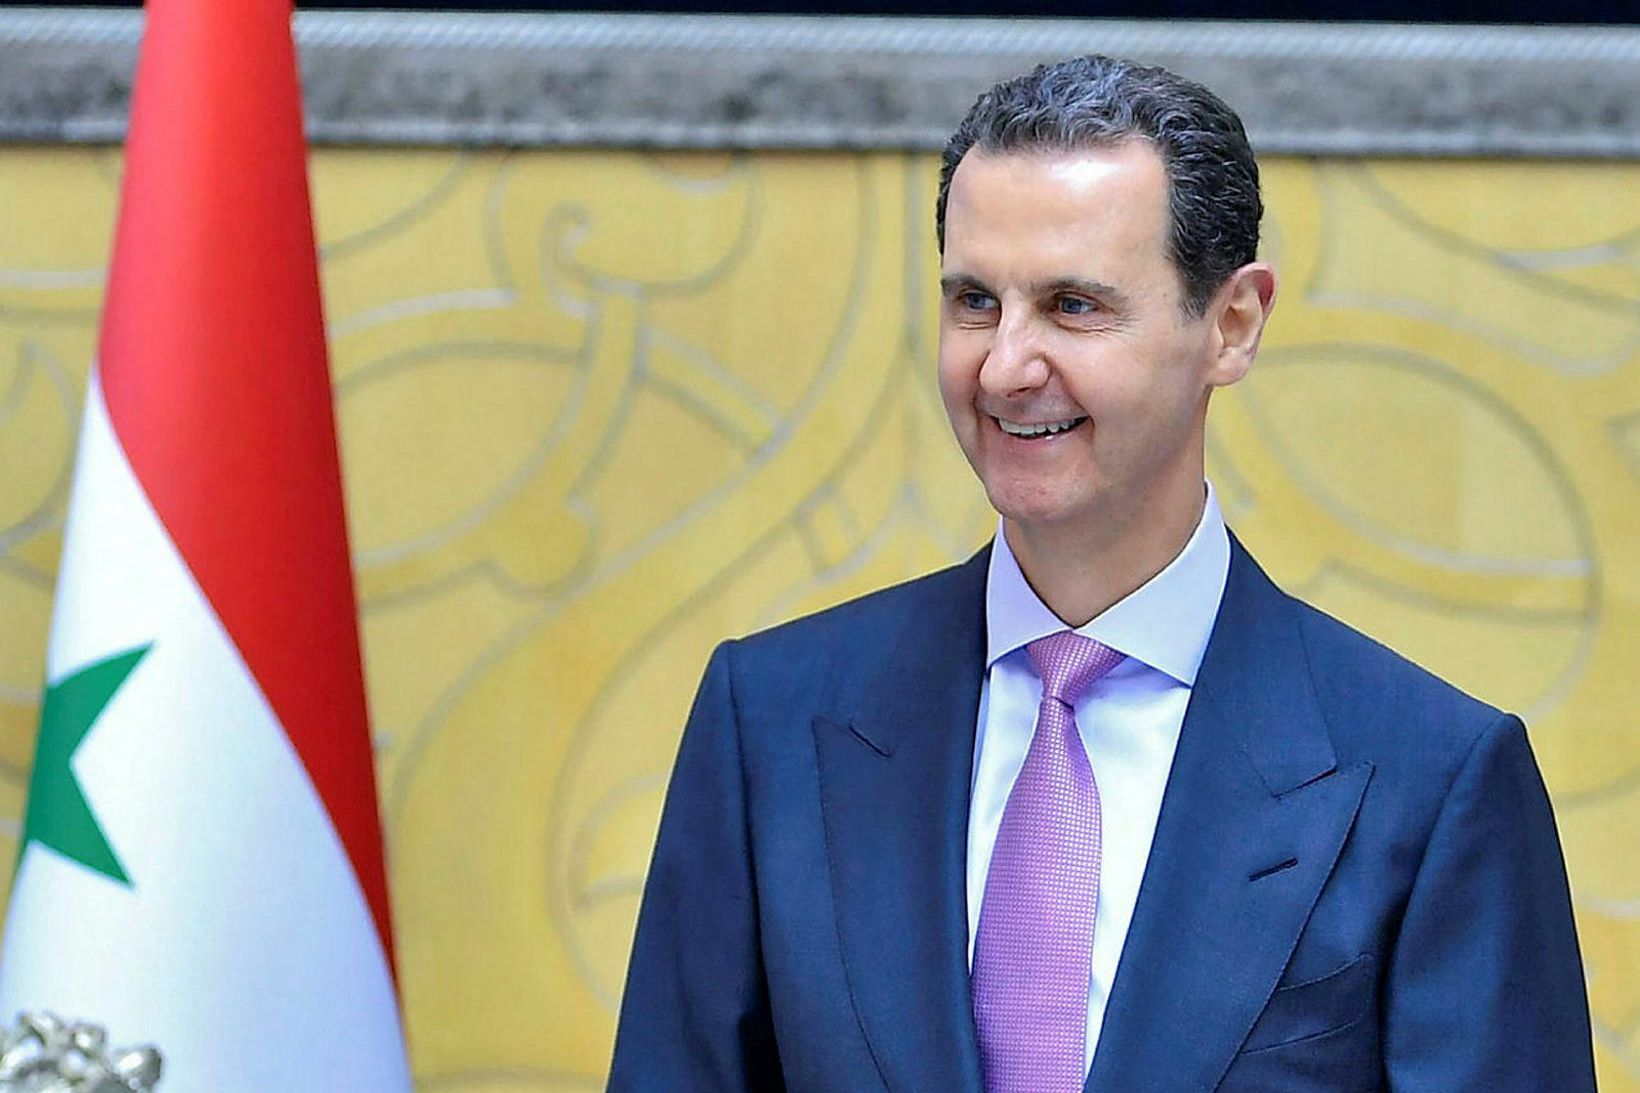 Assad á fundi Arababandalagsins.